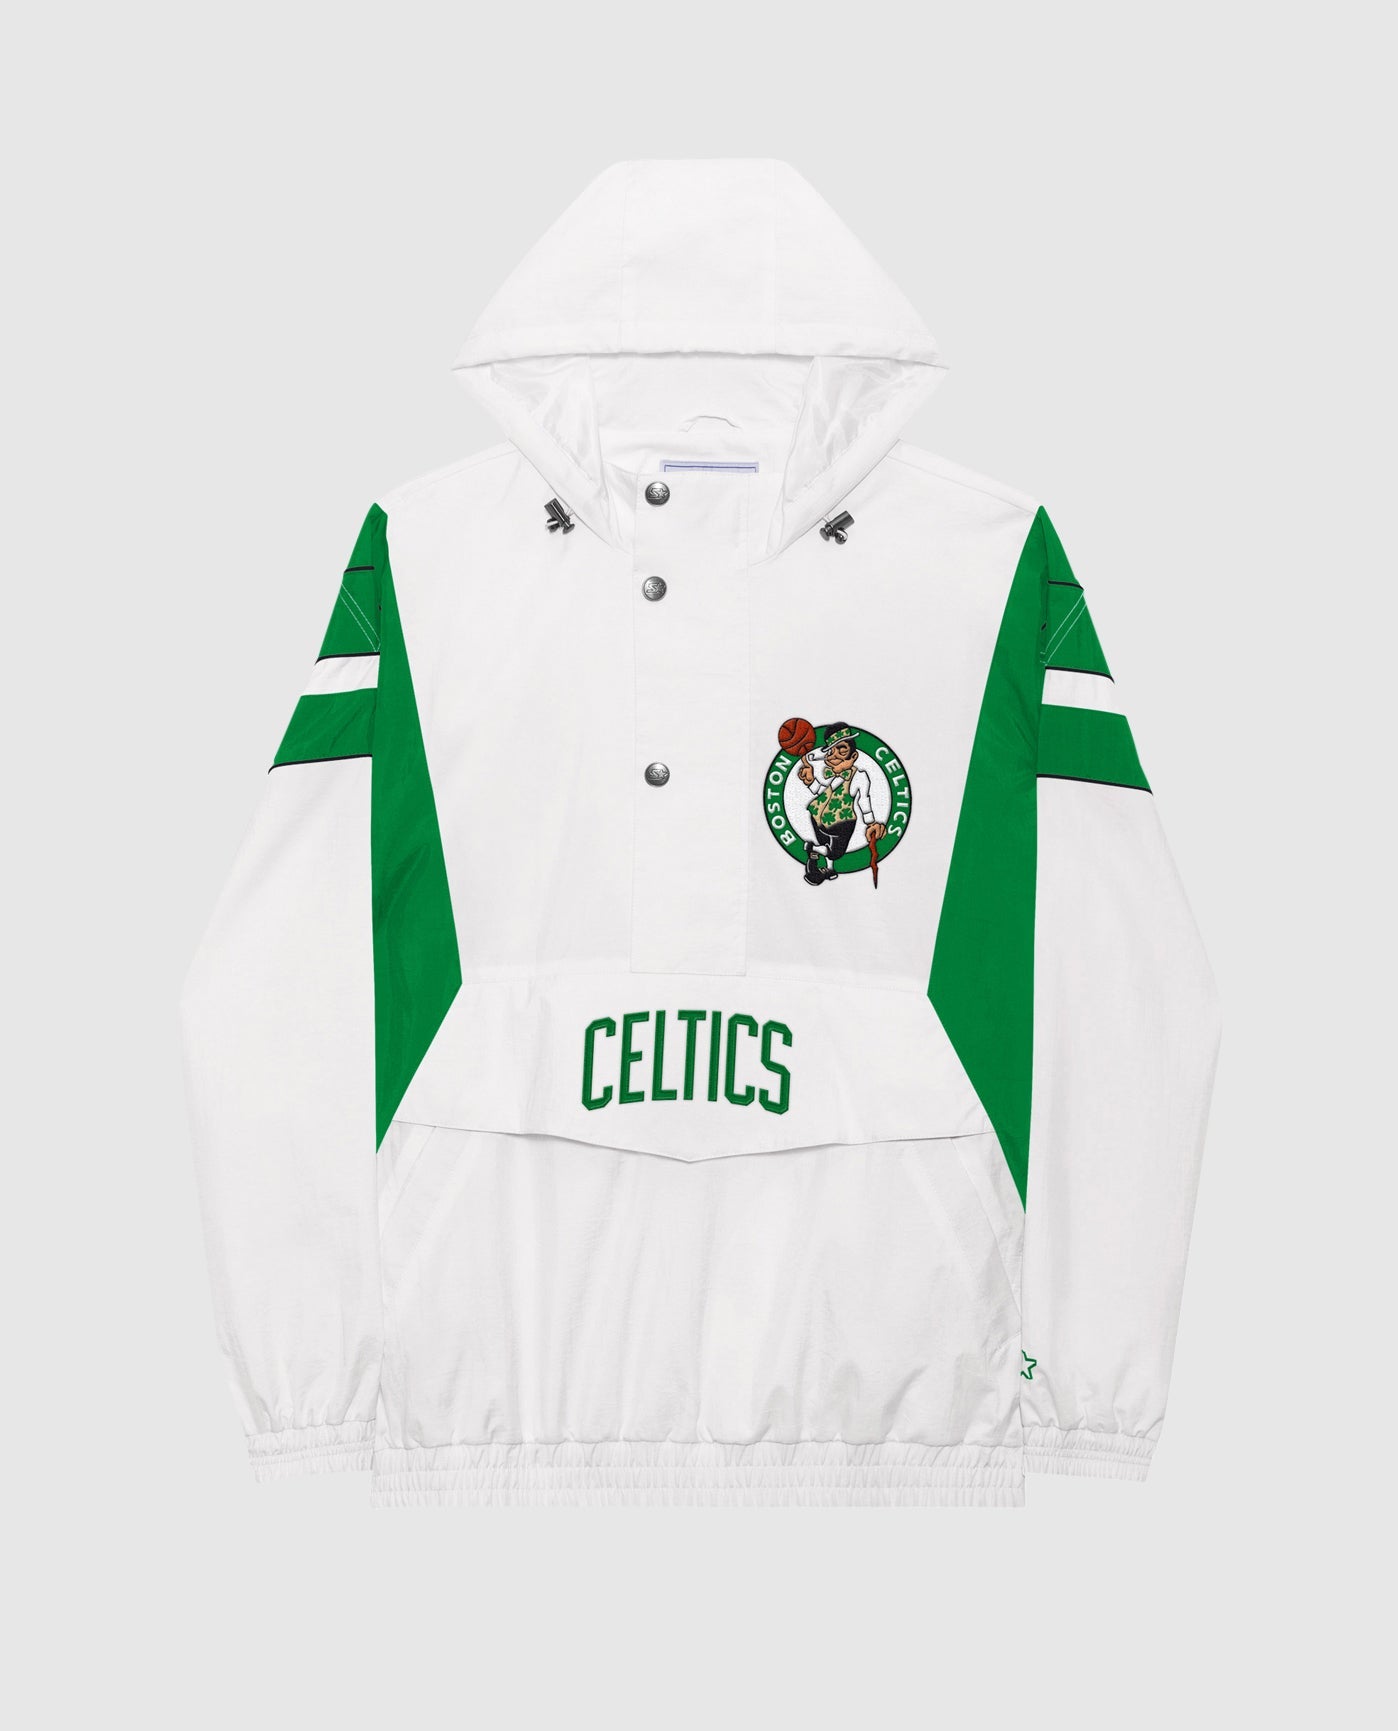 Vintage Boston Celtics Starter Jacket